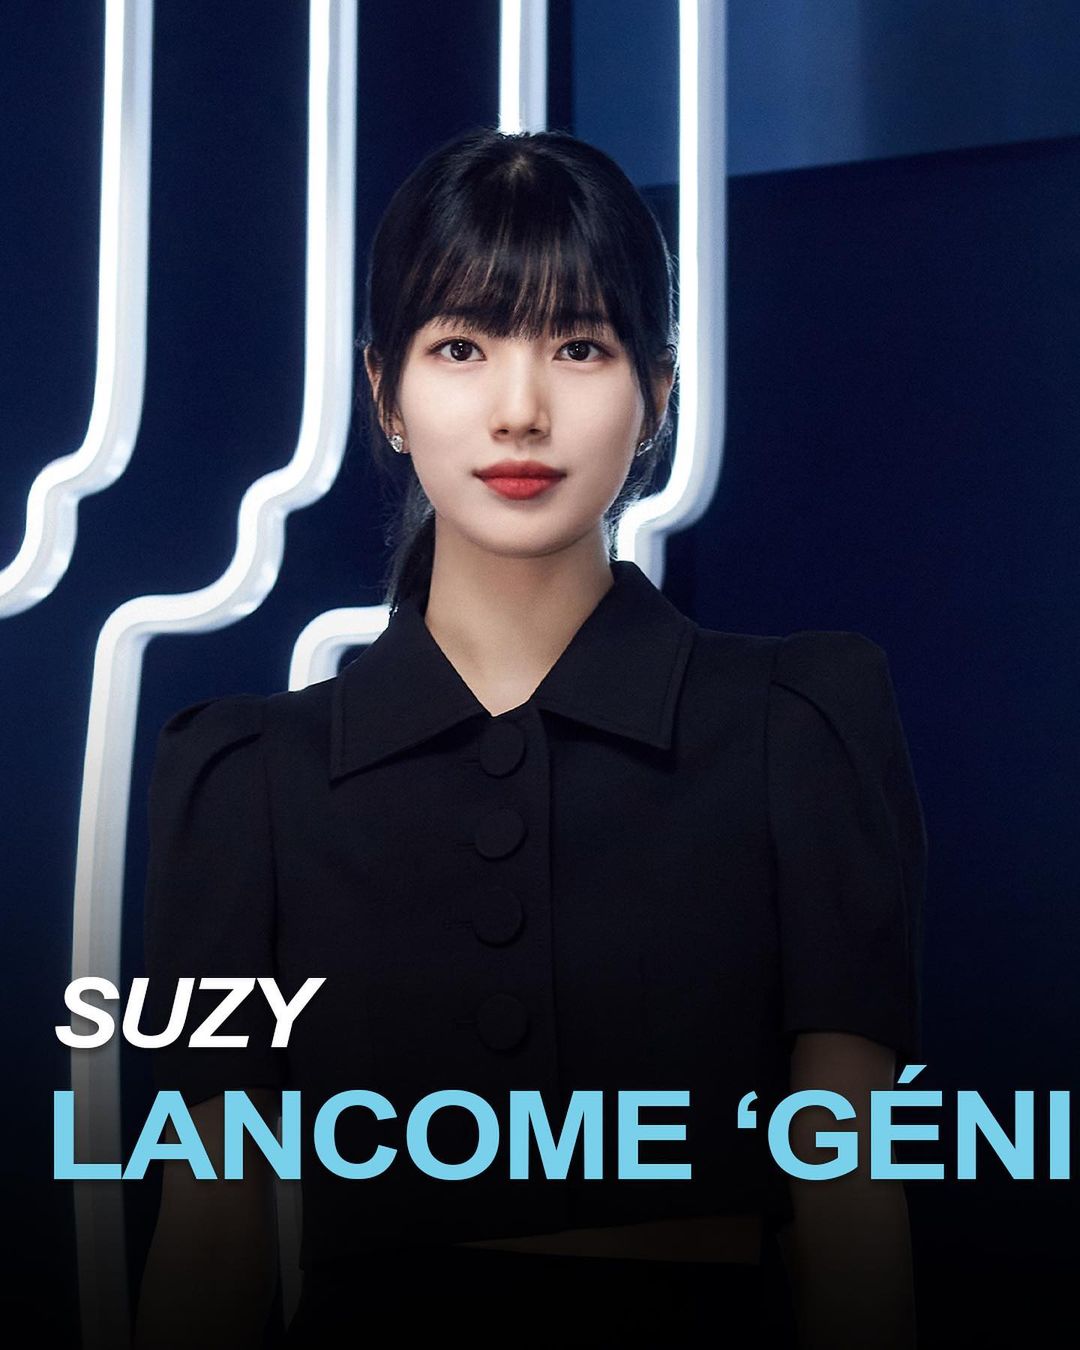 [Chat] Suzy also has a sense of wilderness?  |  Instiz